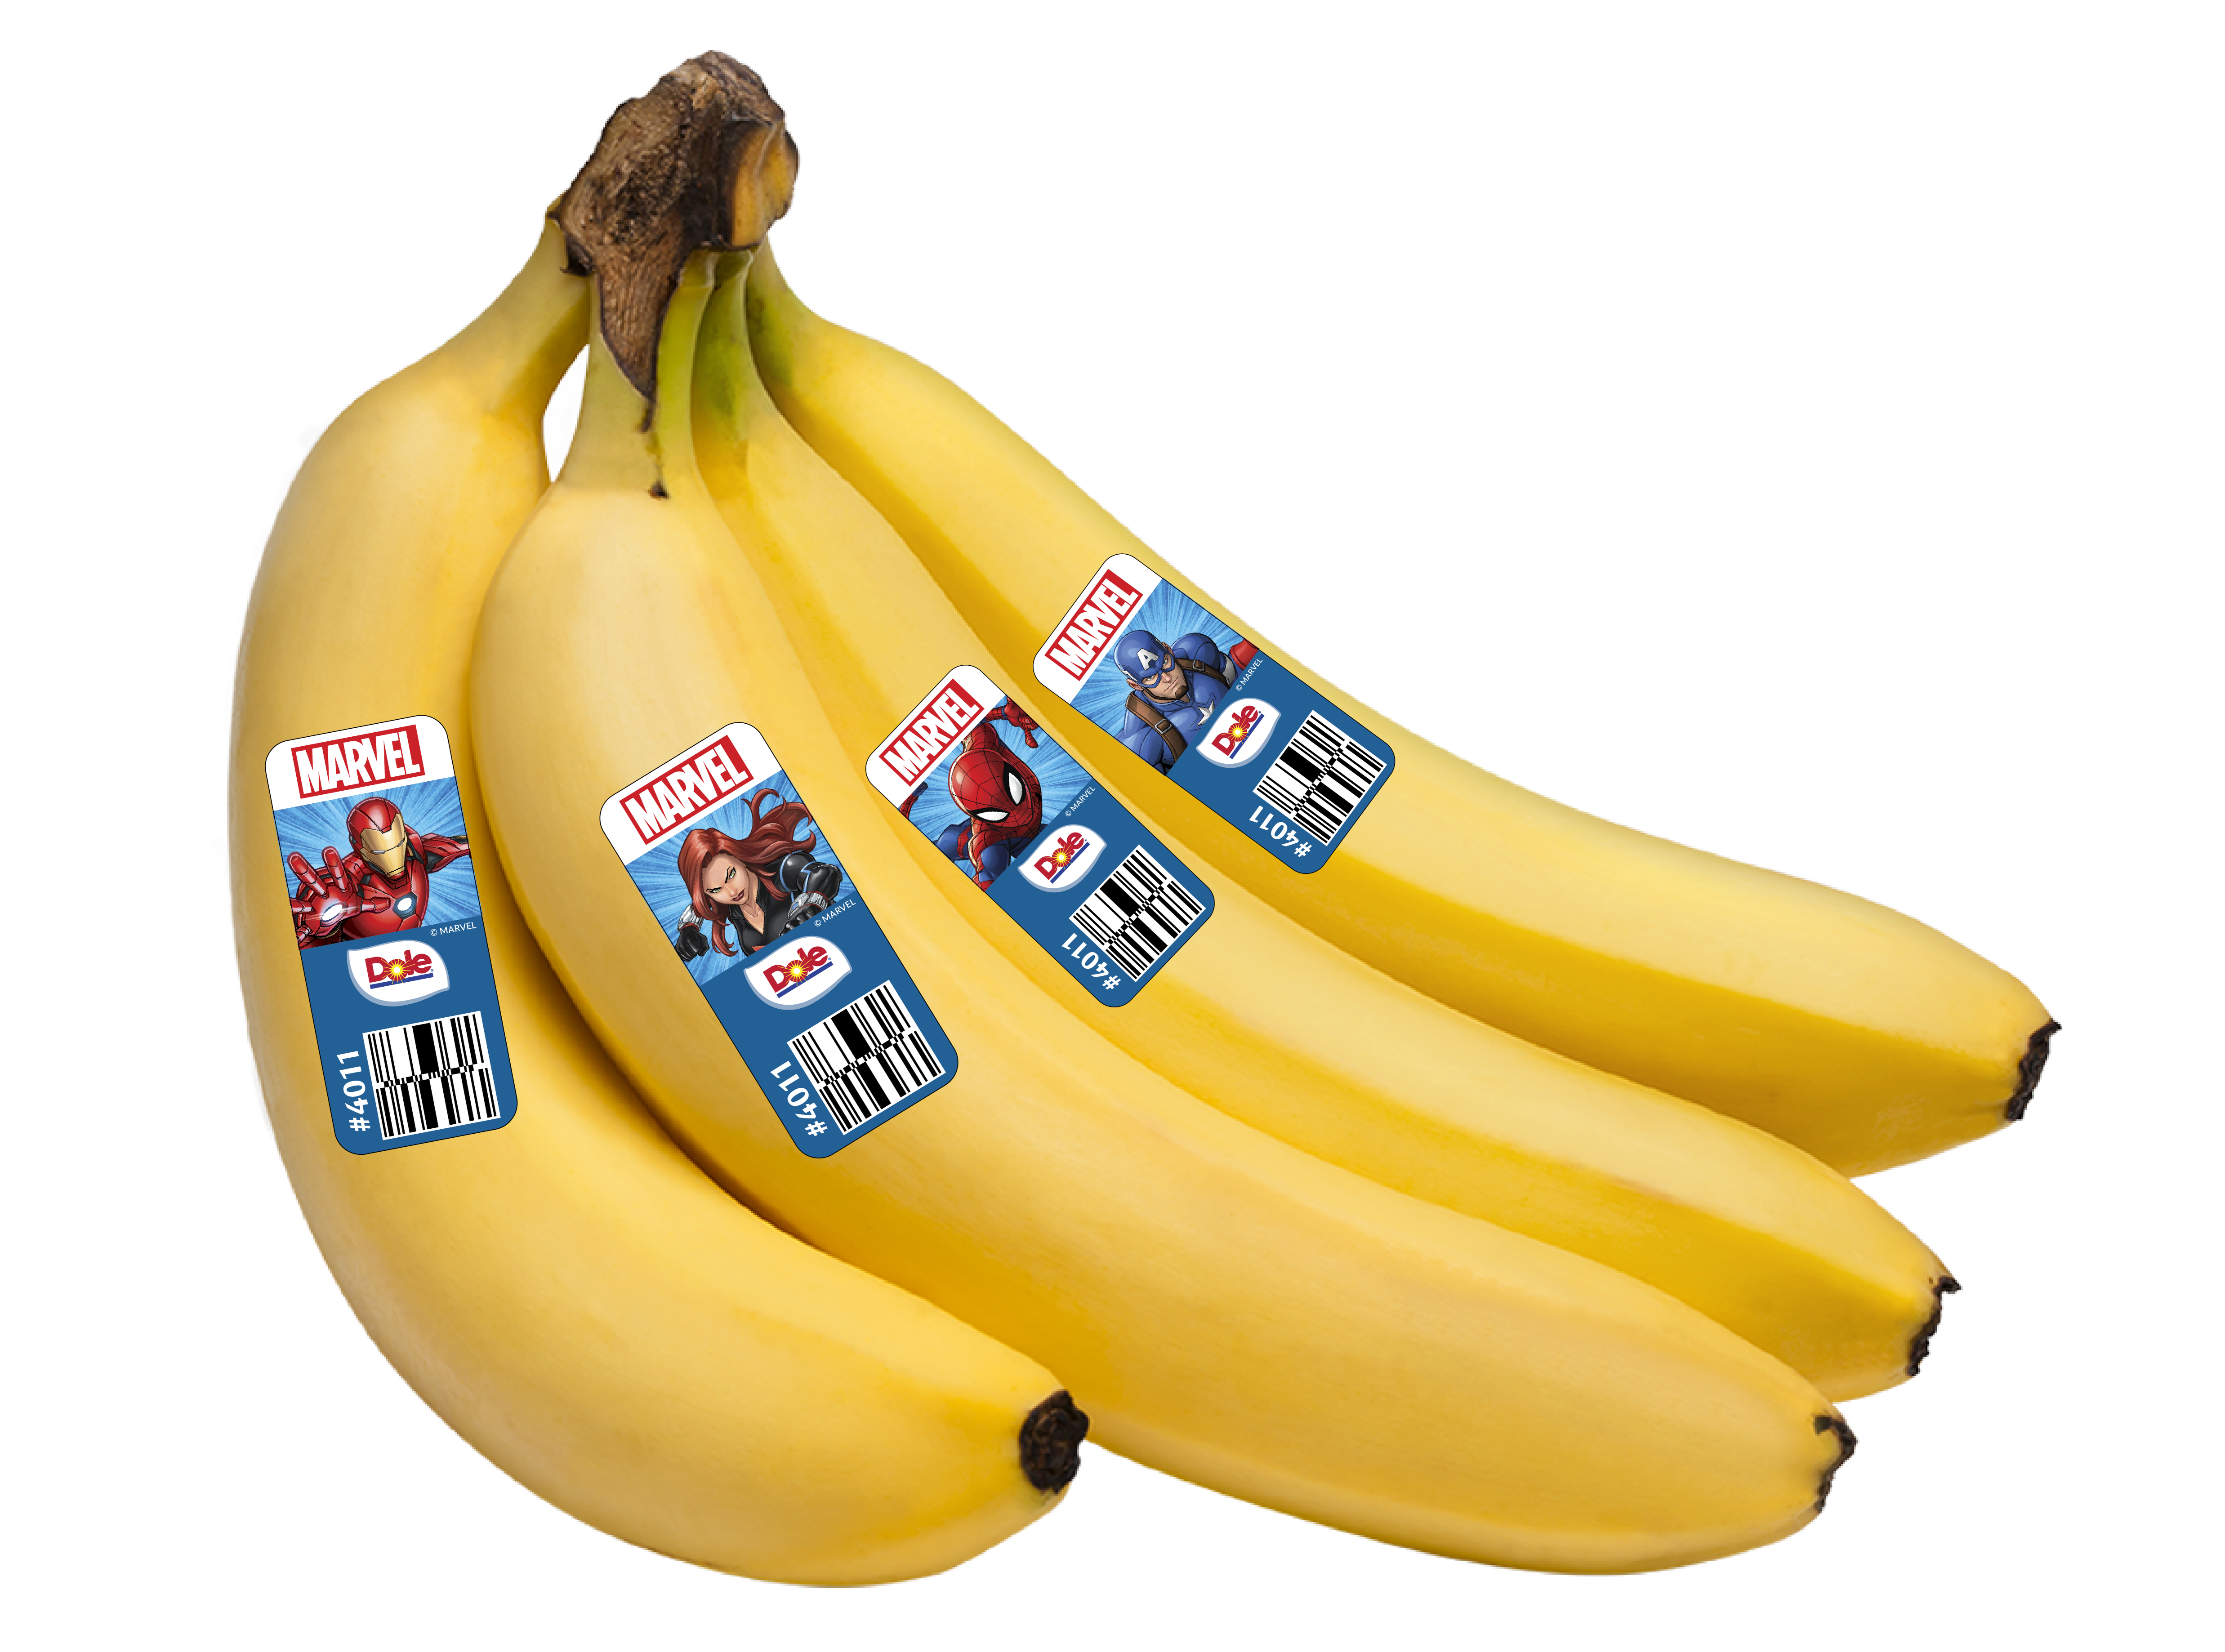 marvel-dole-banana-tags.png